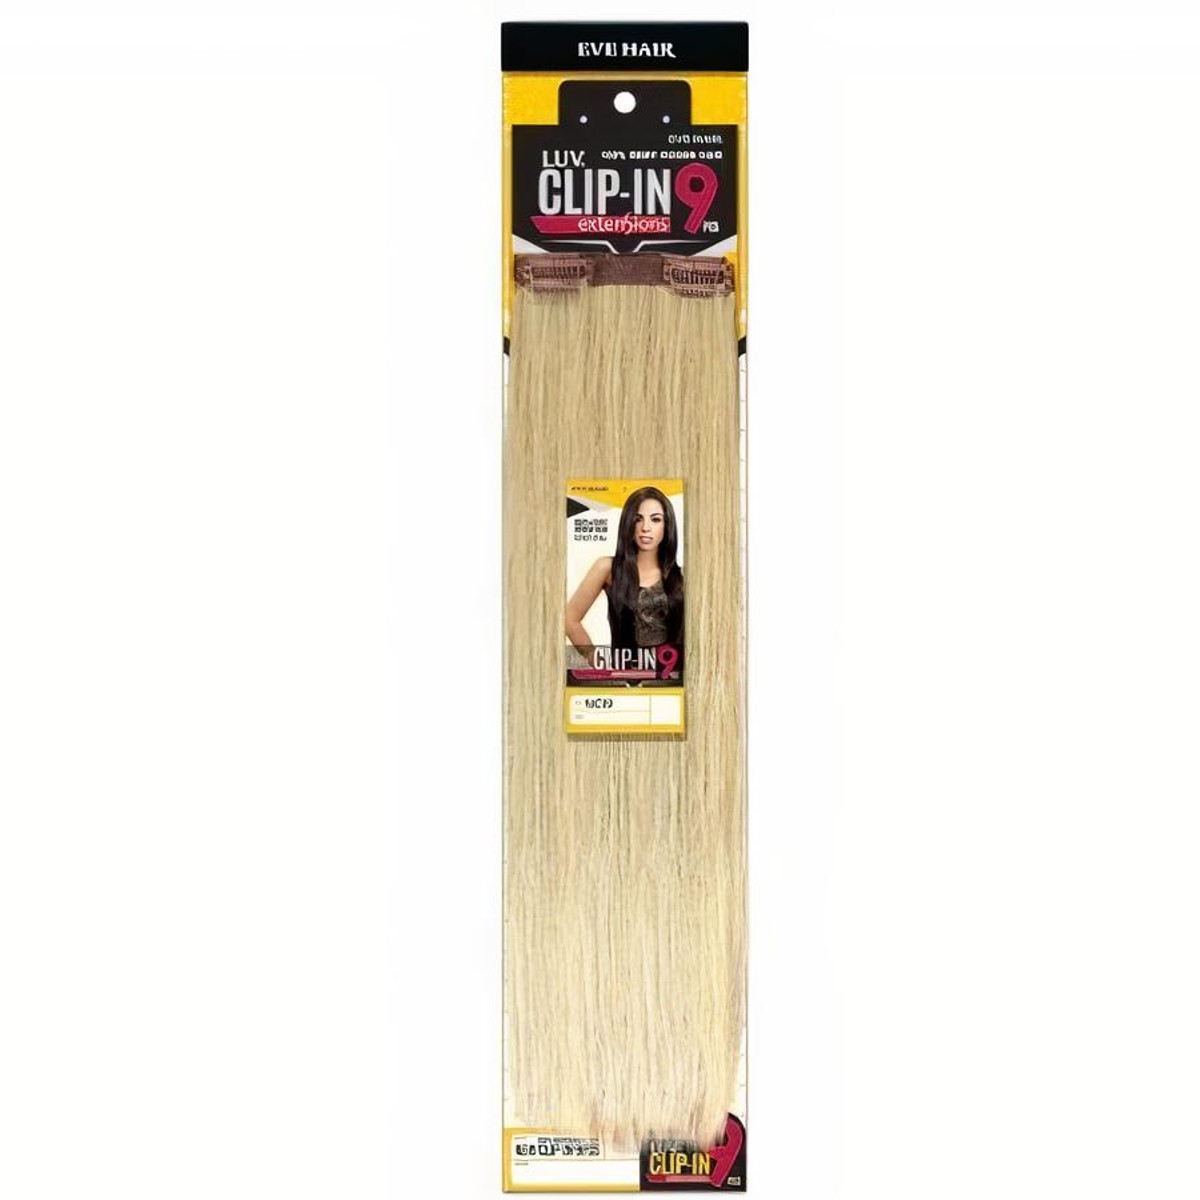 Volumizing Hair Clips - 9Pcs Velcro Hair Clips For Volume, Hair